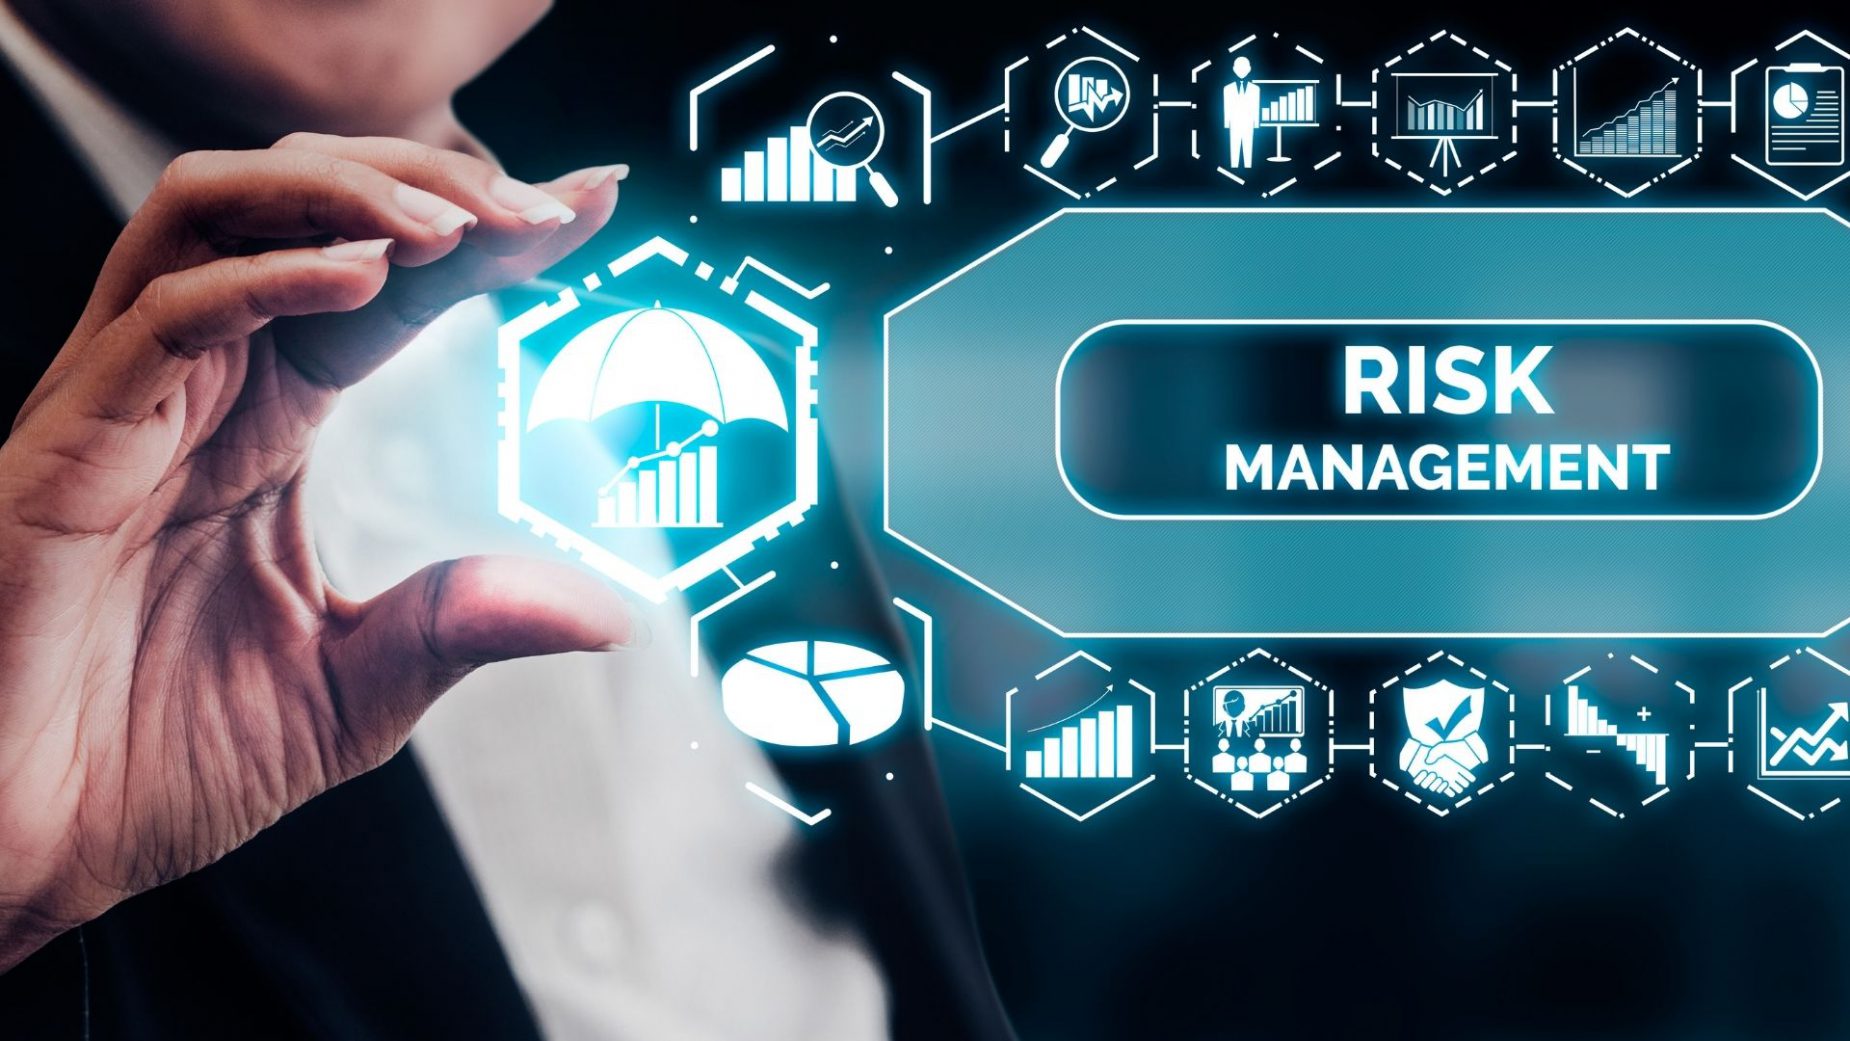 Governance, Compliance And Risk Management Software Market